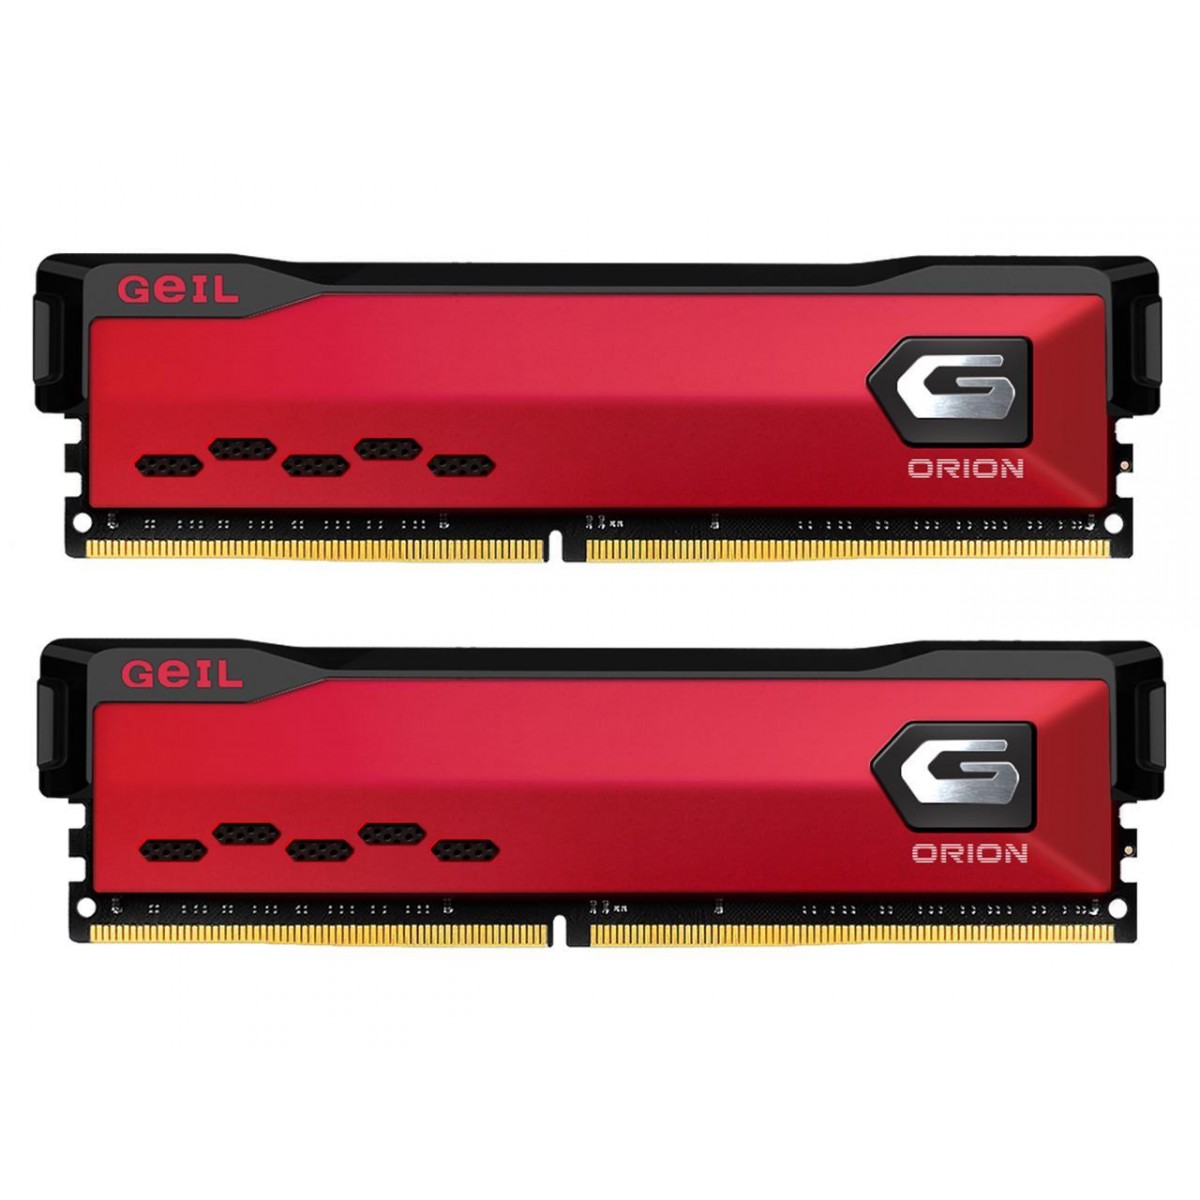 Memória DDR4 Geil Orion, 16GB (2x8GB) 3000MHz, Vermelho, GAOR416GB3000C16ADC